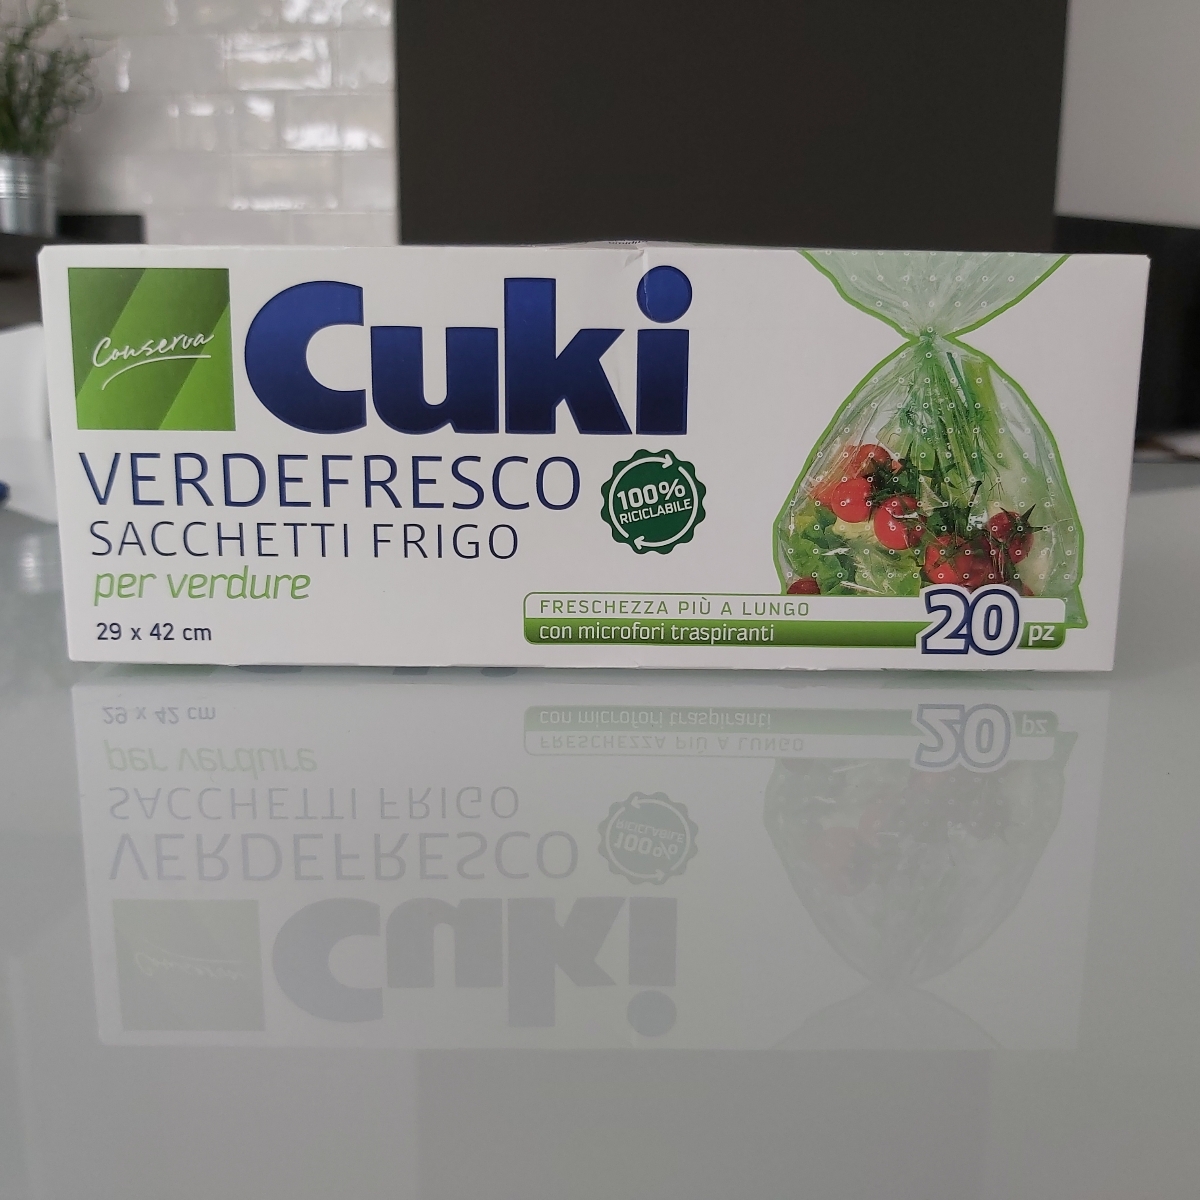 Cuki Verdefresco Sacchetti Frigo Per Verdure Review | abillion